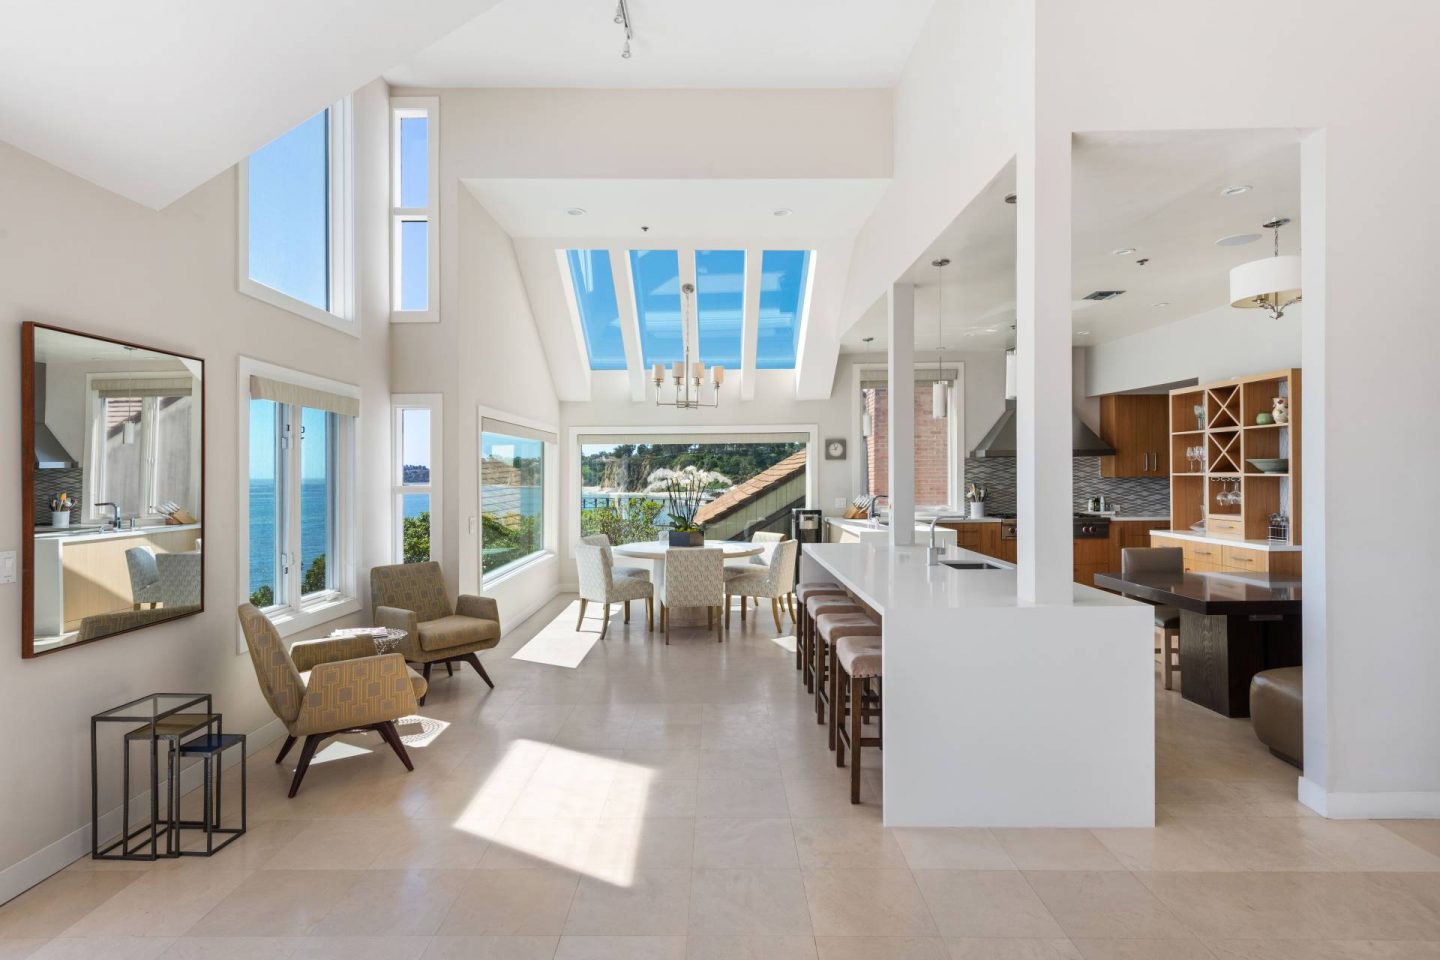 Chris Chelios's Malibu mansion for sale for $75 million